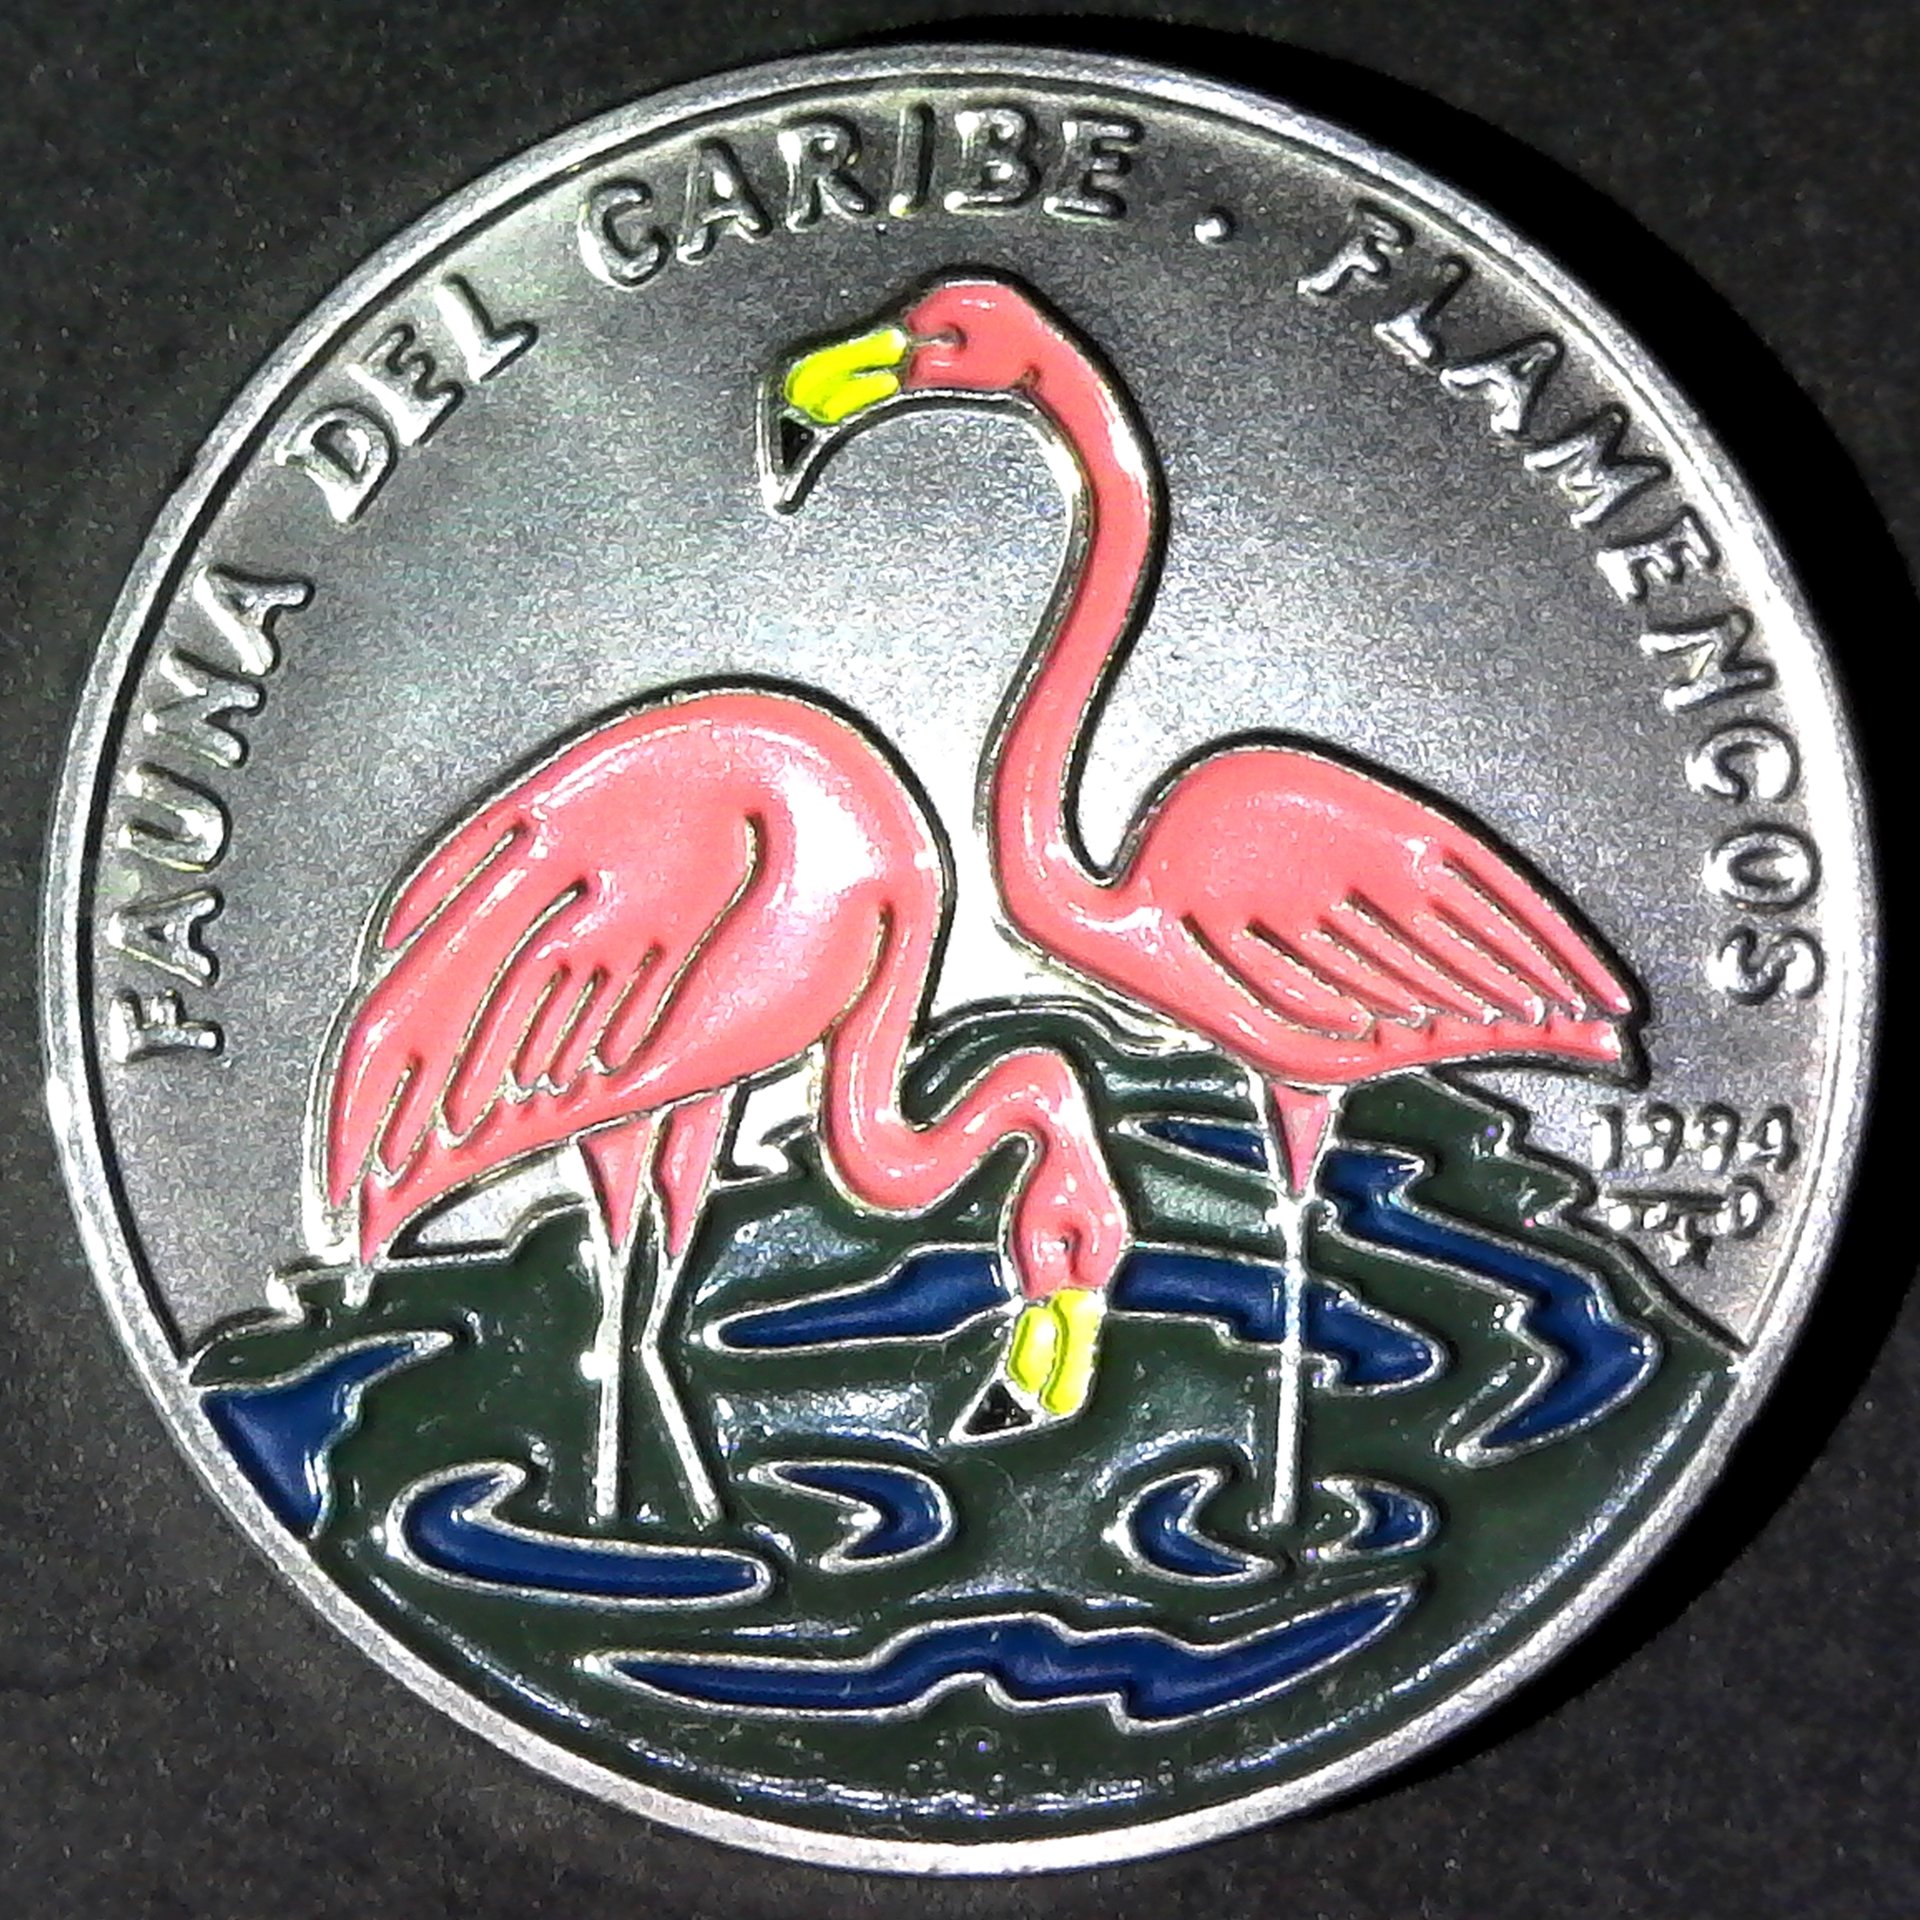 Cuba 1994 flamingo obv.jpg